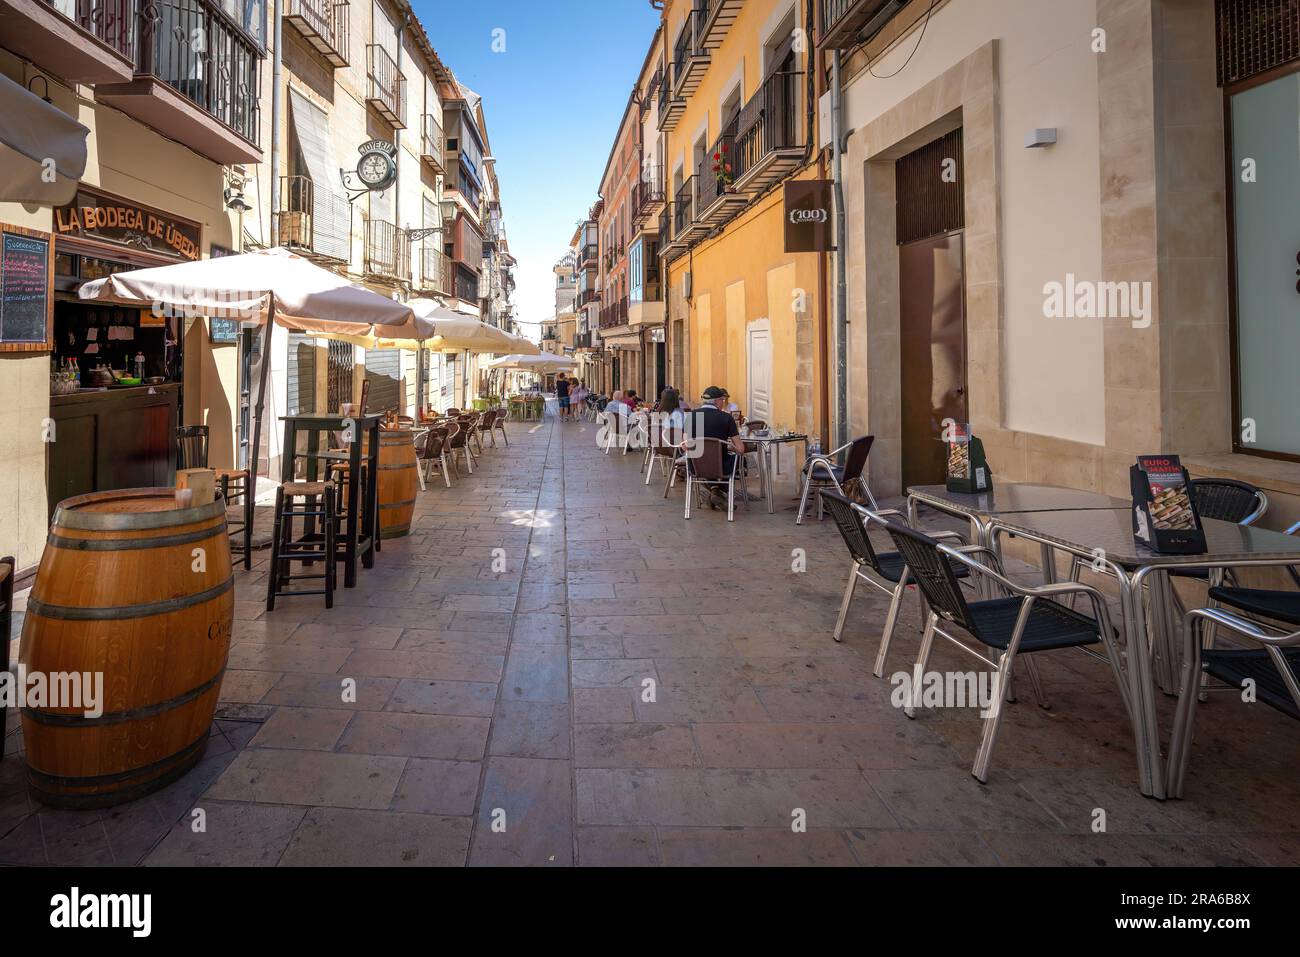 Calle Real Street - Ubeda, Jaen, Spain Stock Photo